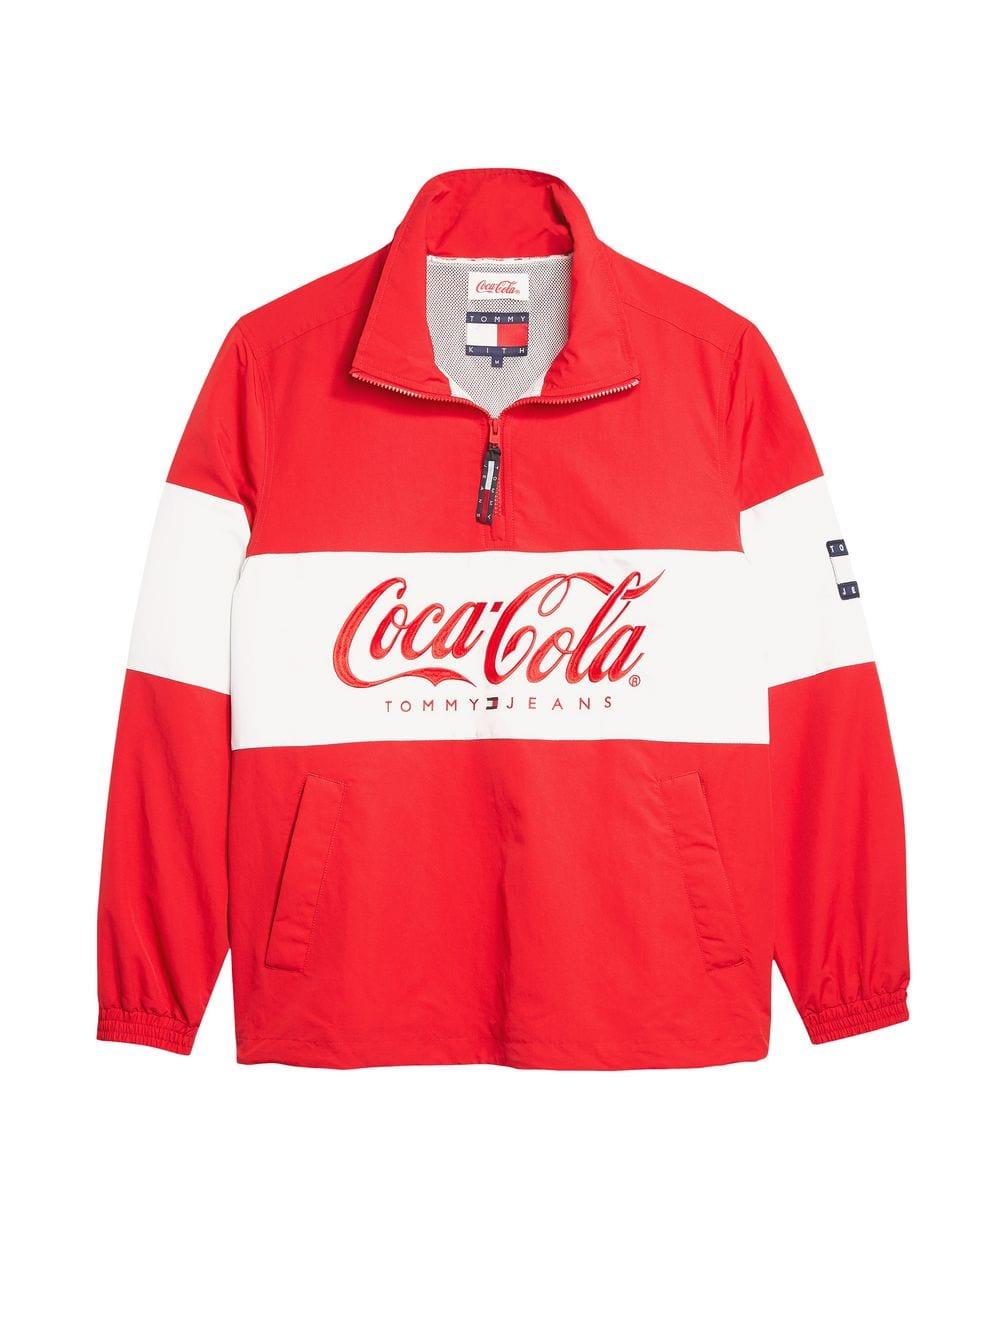 tommy hilfiger coca cola jacket